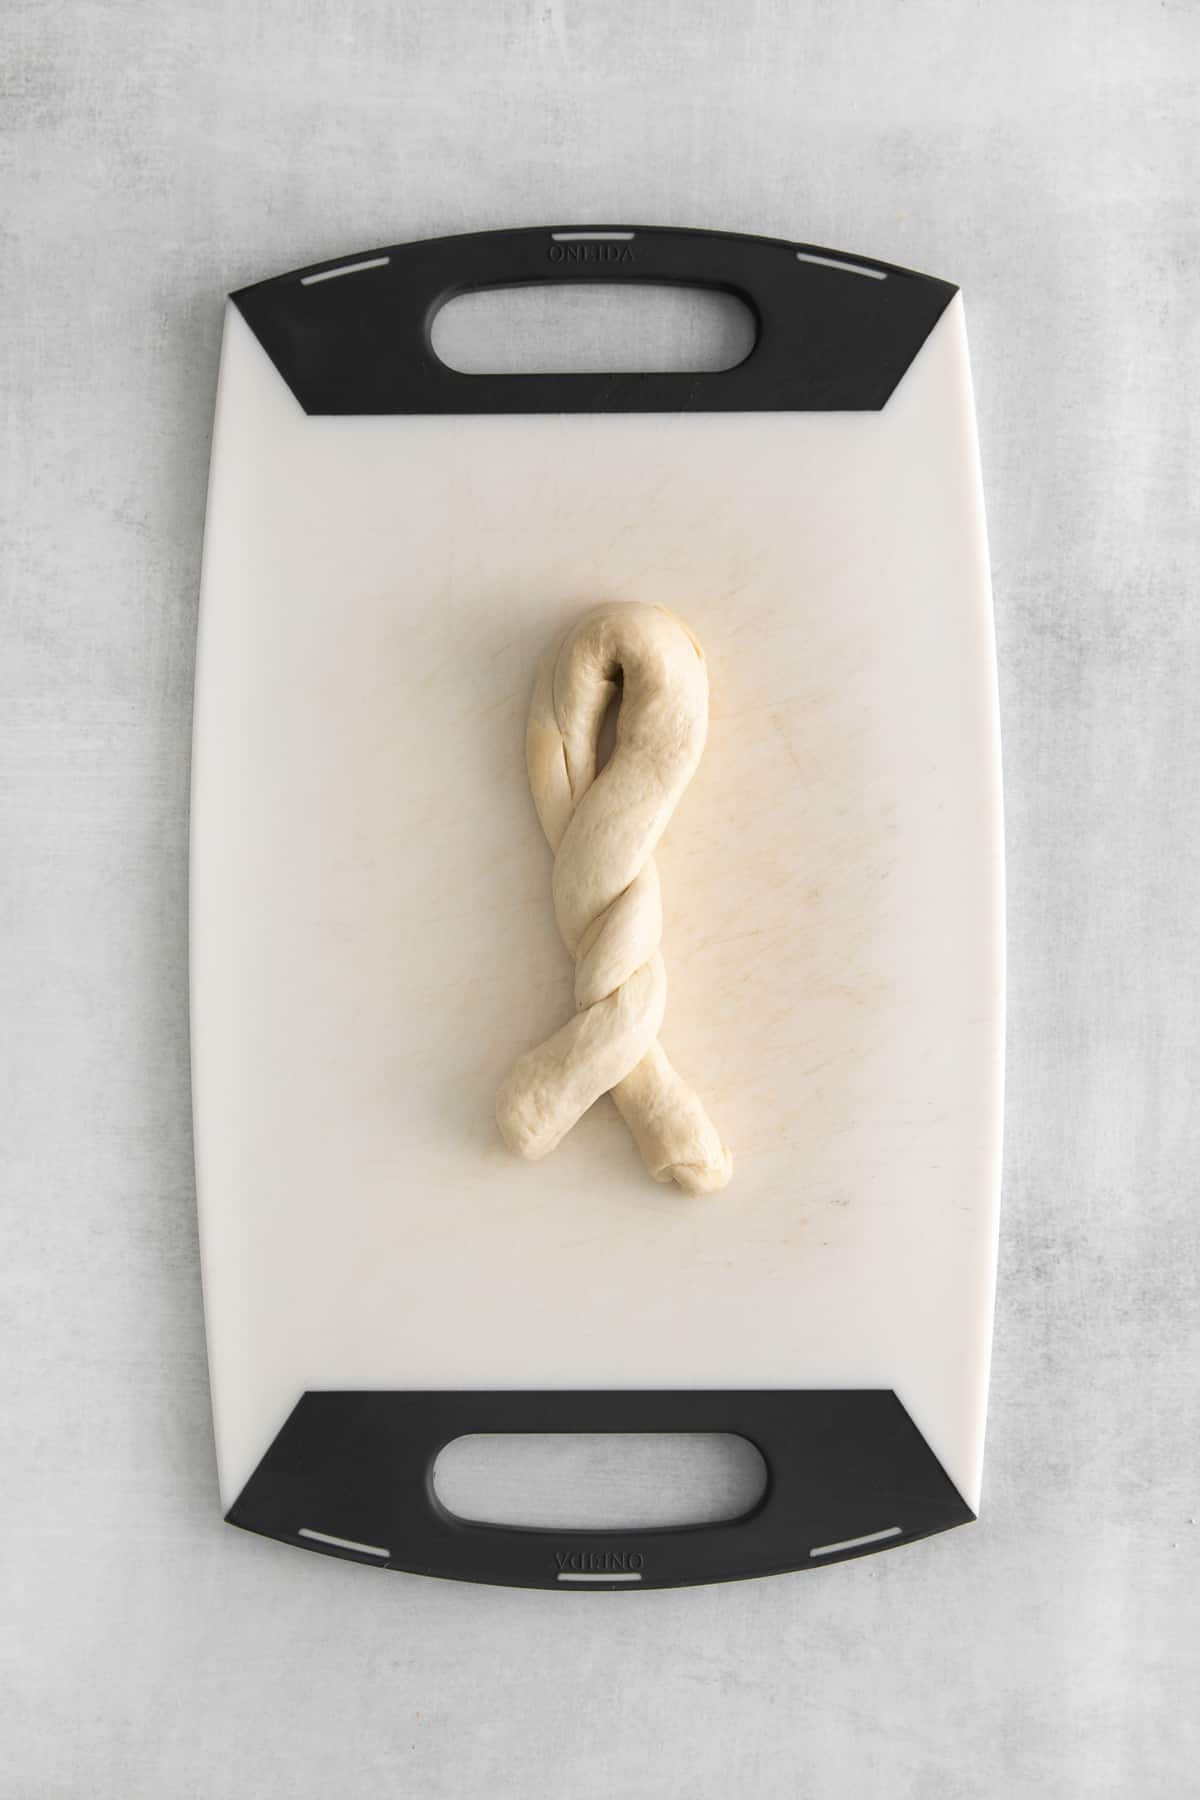 Twisted dough for parmesan garlic knots. 